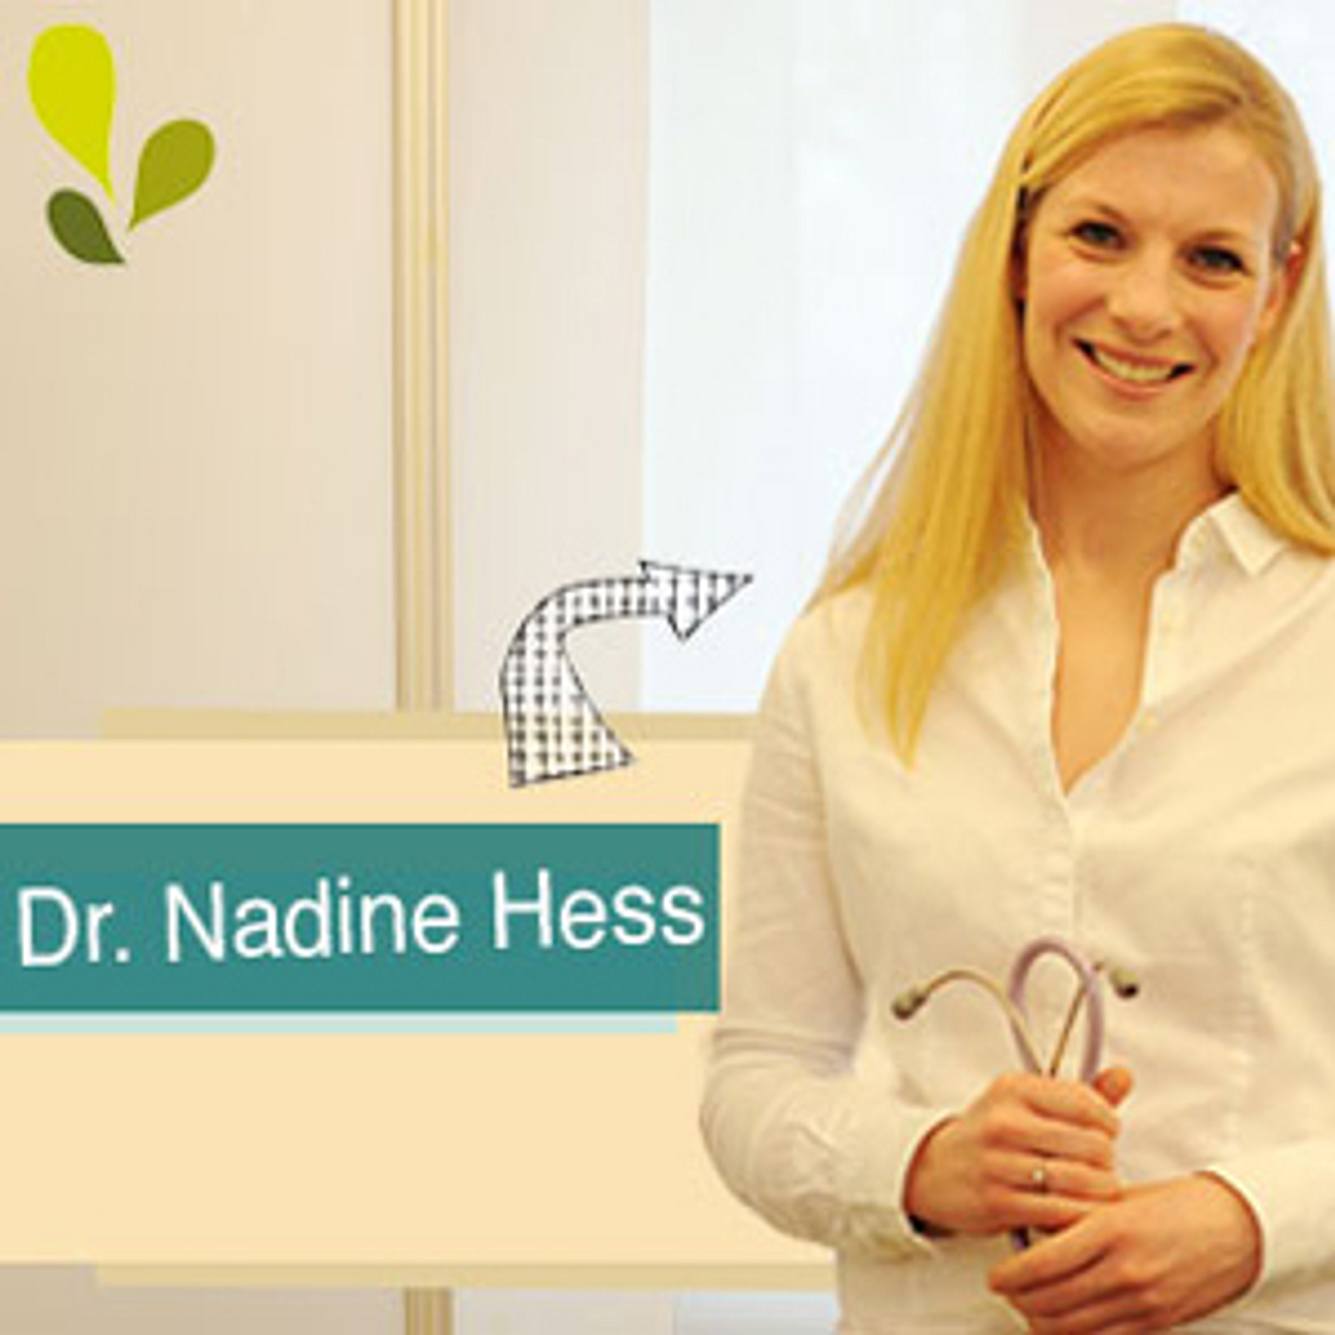 Dr. Nadine Hess